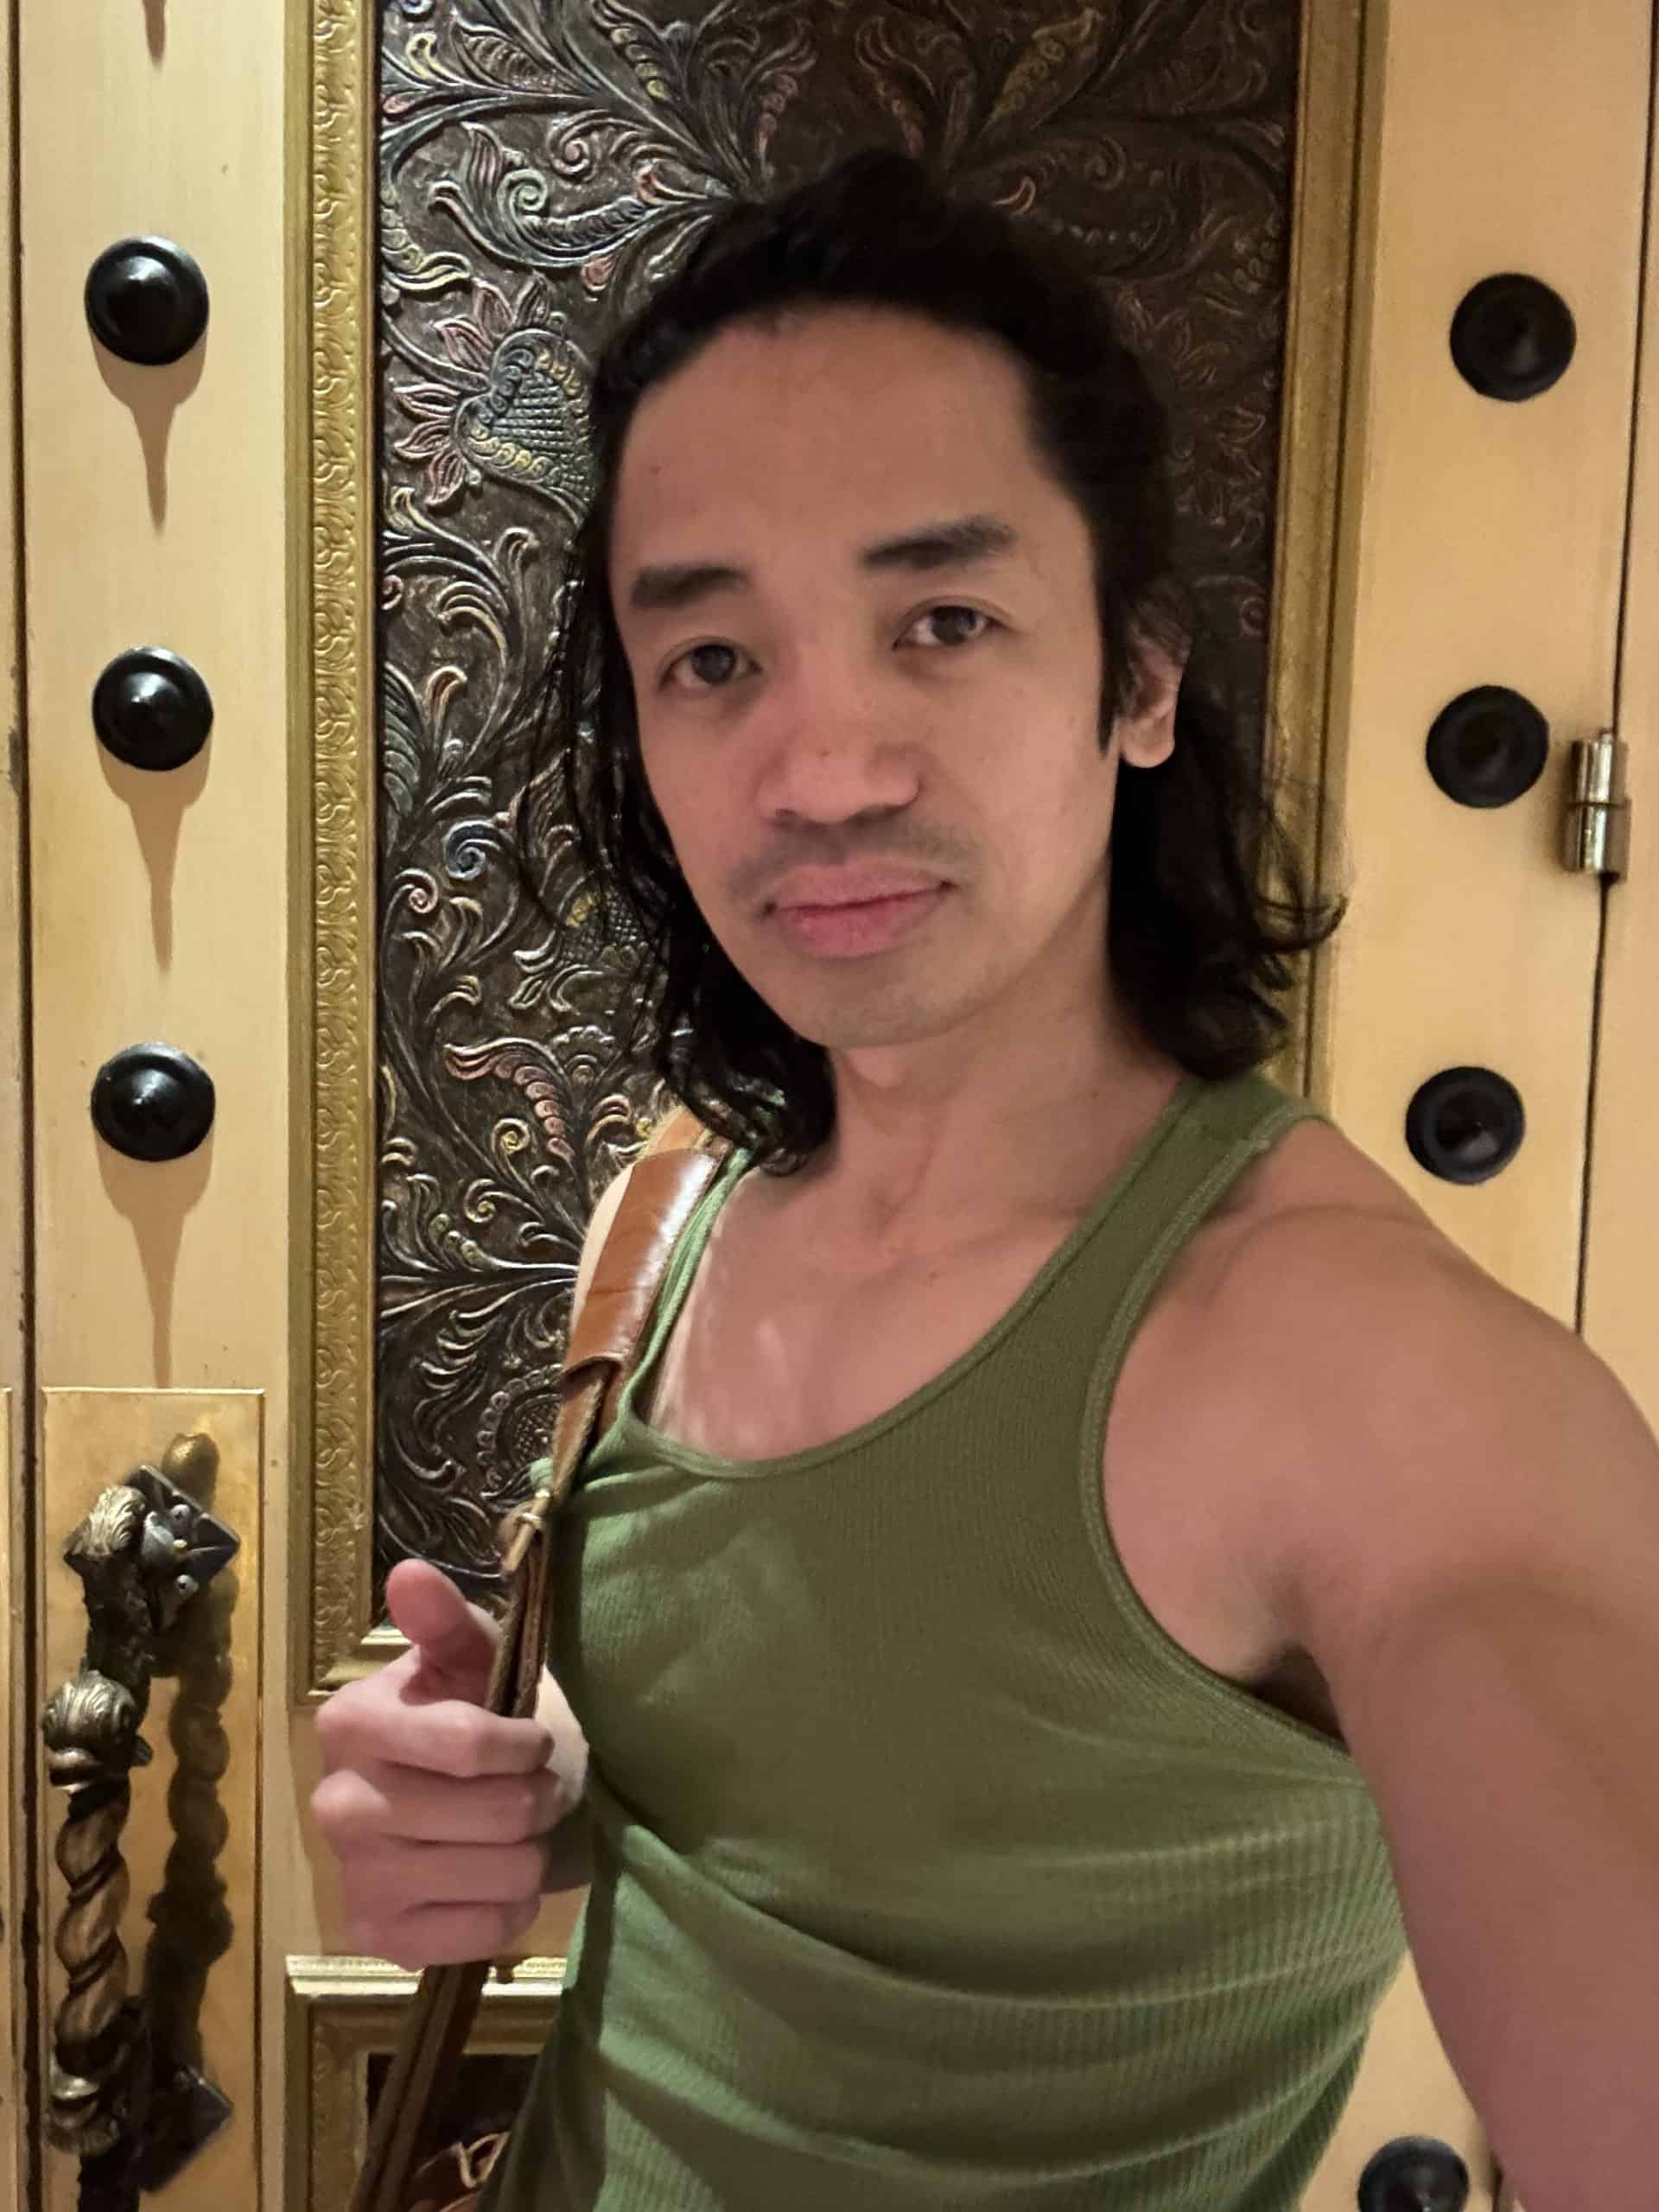 Jax Solomon Premier Sensual Tantra Bodywork Las Vegas Selfie By Ornate Door at Treasure Island After A Couple-Client